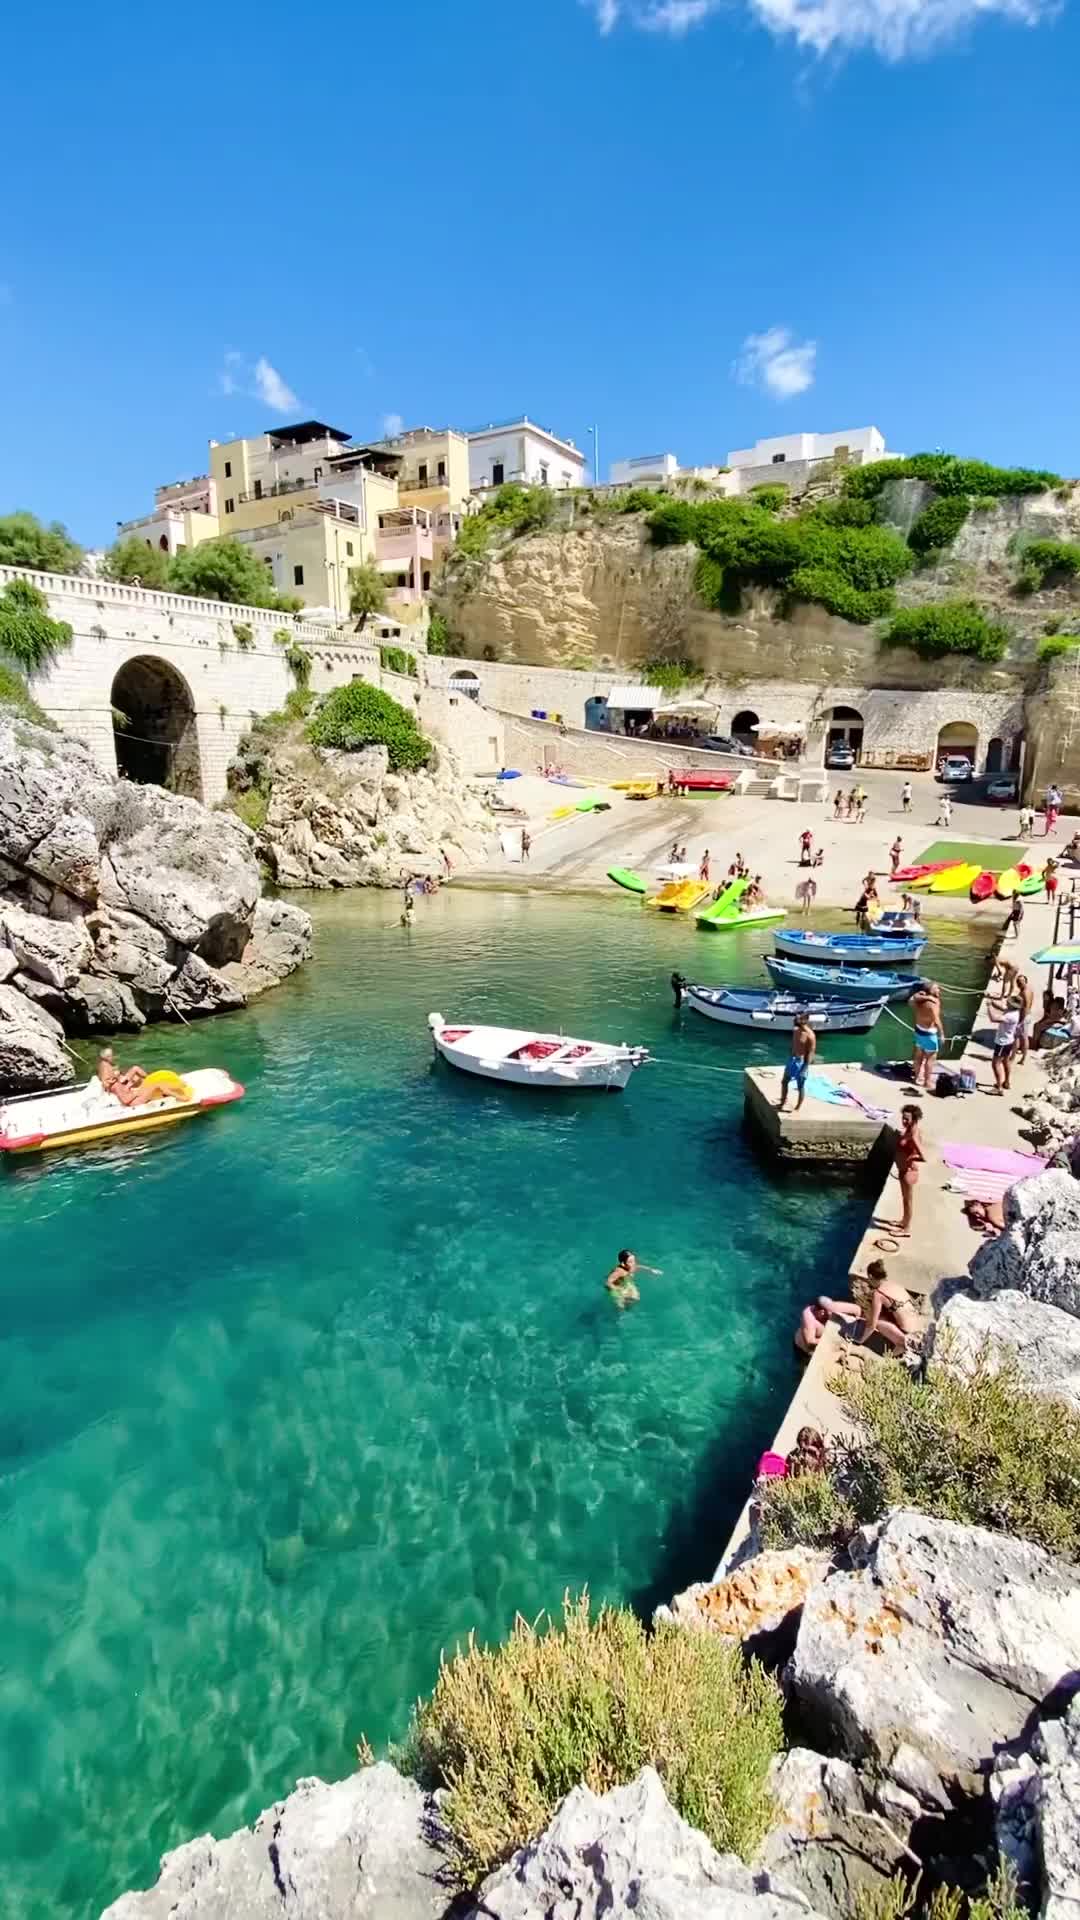 Stunning Castro Marina Pool in Puglia, Italy 💦💎